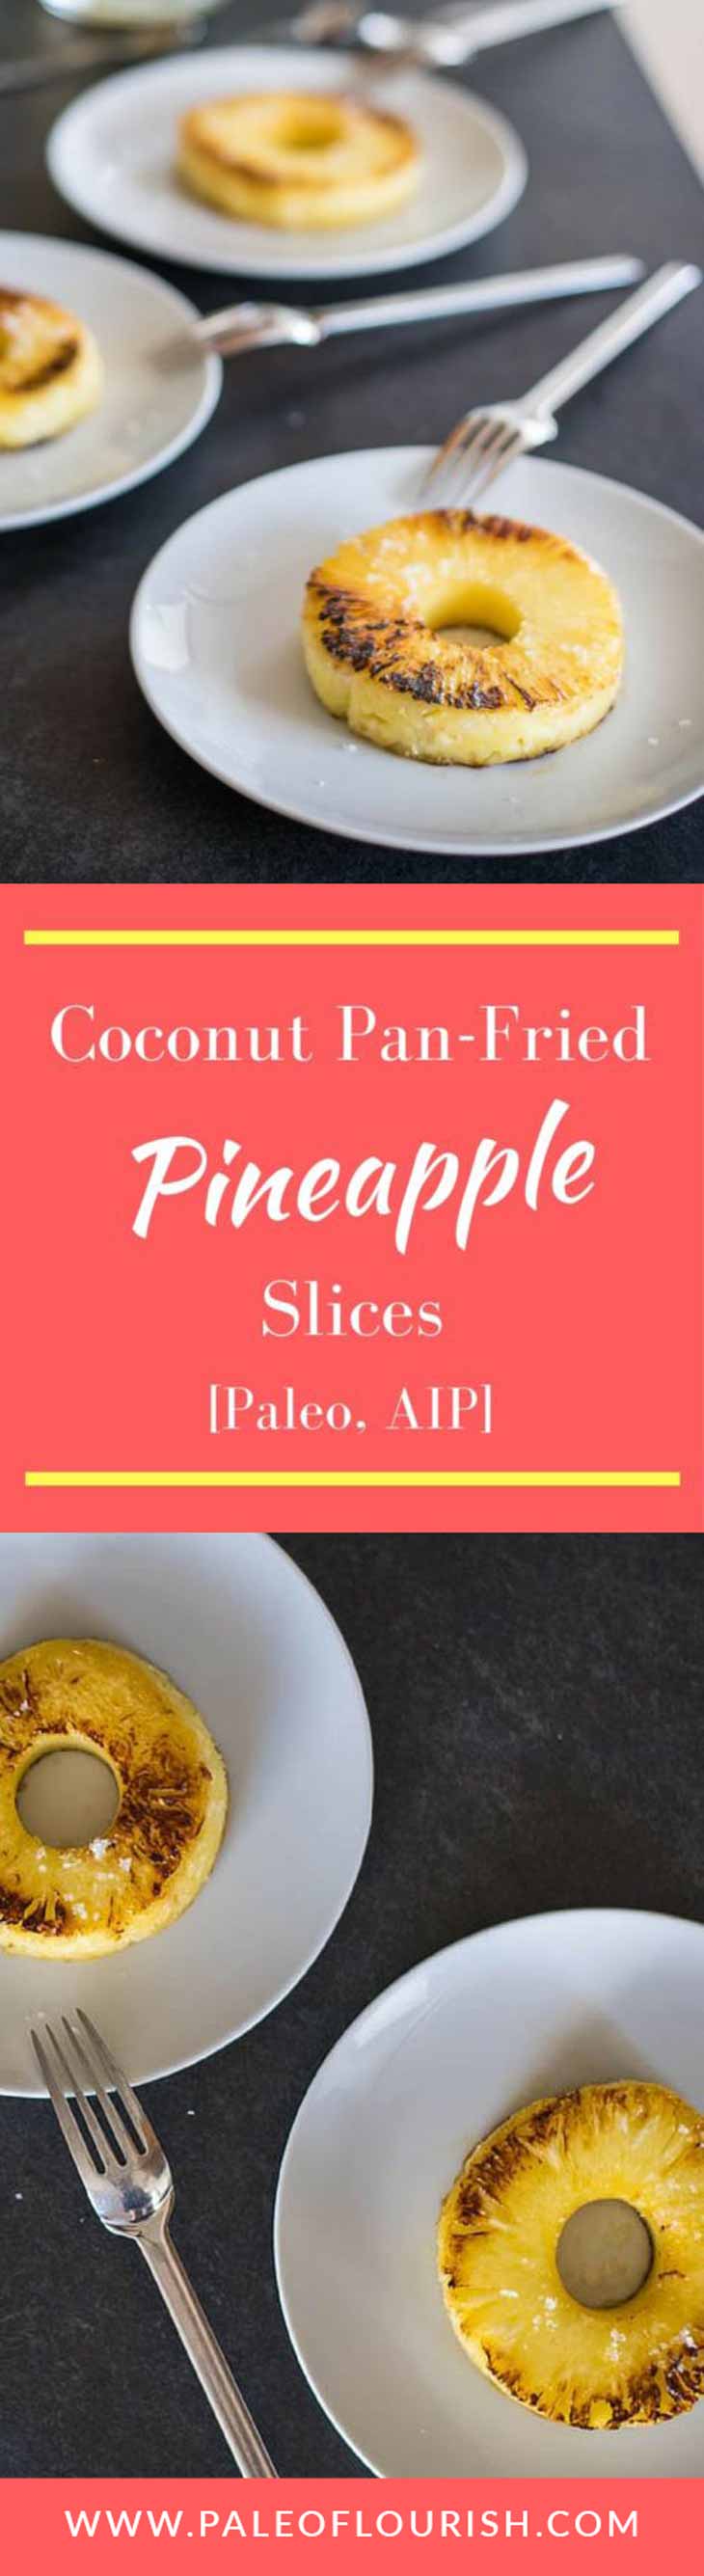 Coconut Pan-Fried Pineapple Recipe [Paleo, AIP] #paleo #AIP #recipes https://paleoflourish.com/coconut-pan-fried-pineapple-recipe